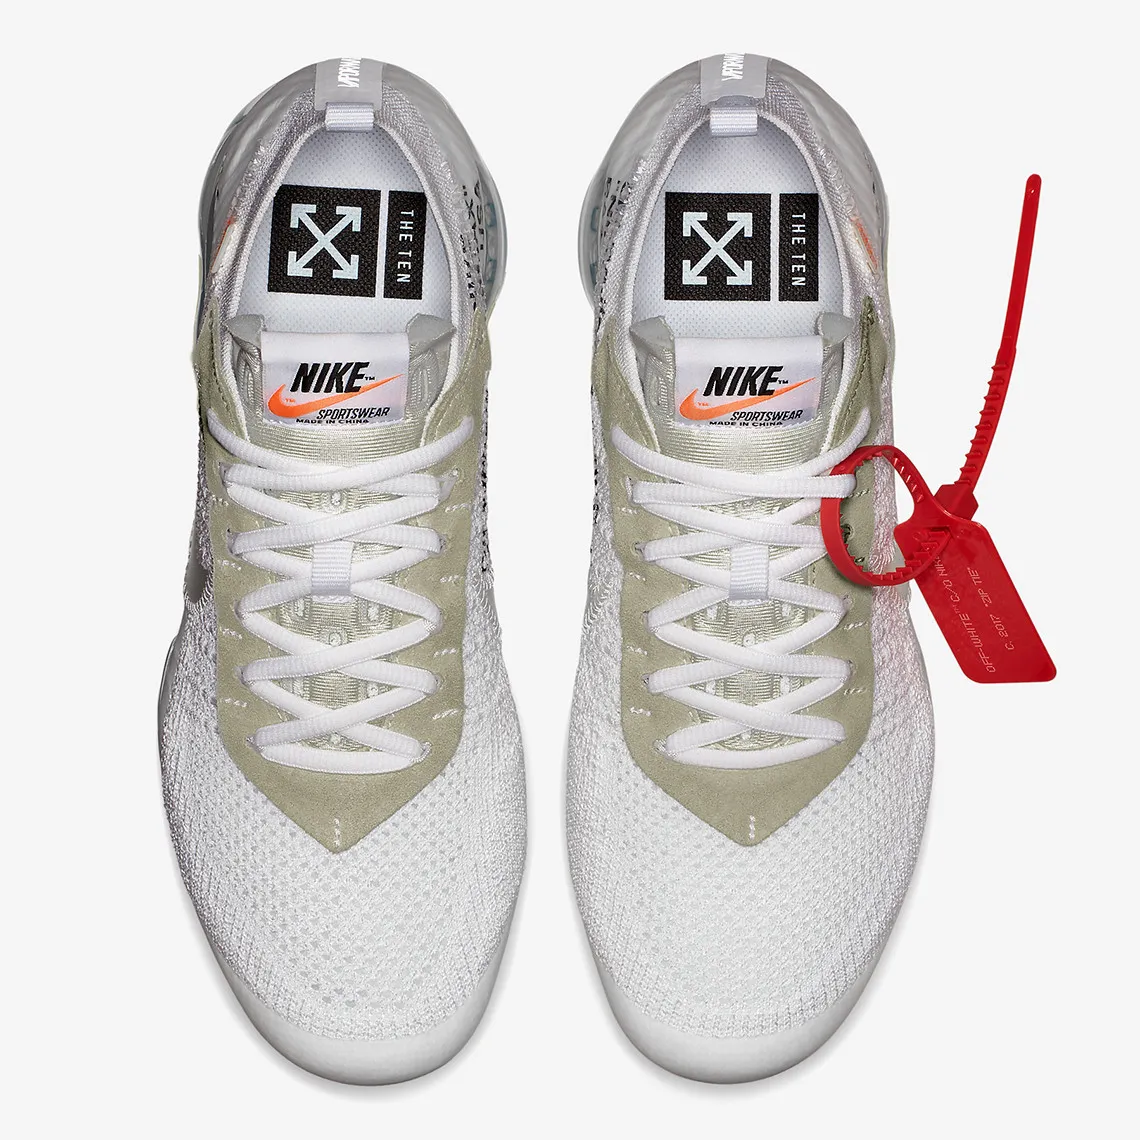 OW Off White x Nike Air Vapòrmax VPM Ejecución de las zapatillas de deporte de